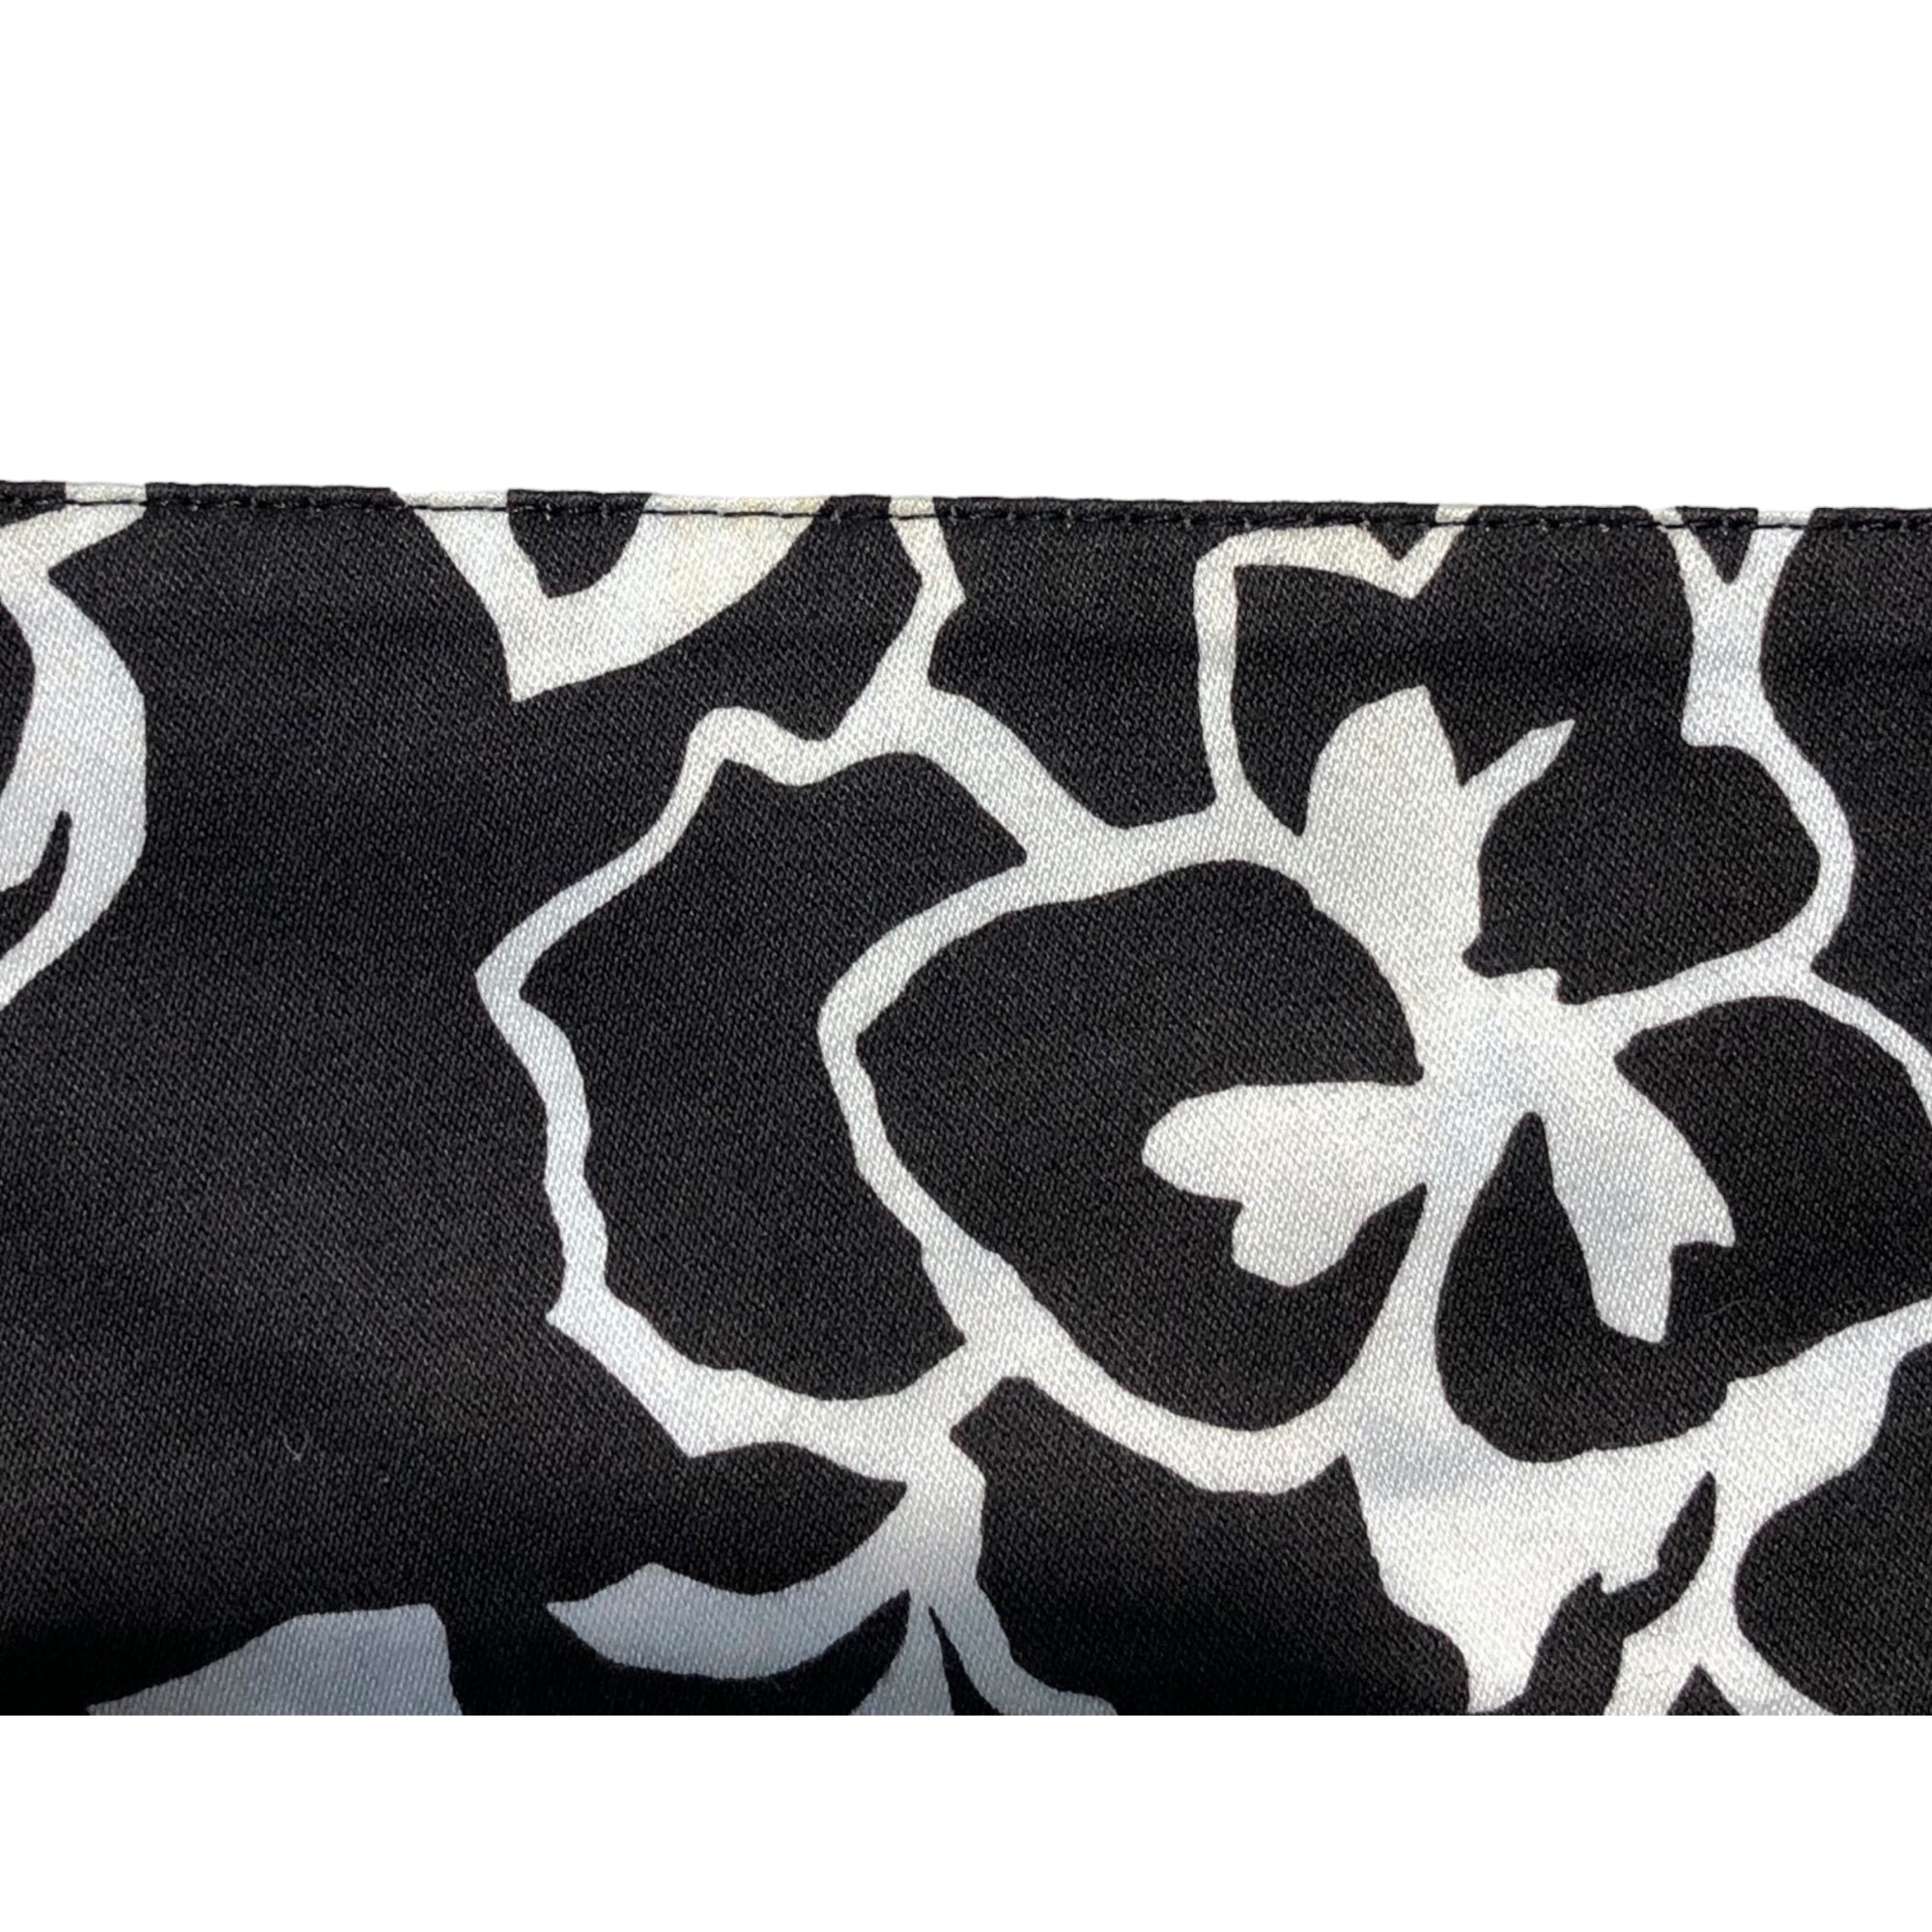 BURBERRY LONDON(バーバリーロンドン) Flower print belted sleeveless long dress フラワー プリント ベルテッド ノースリーブ ロング ワンピース FMA98-507 38(M程度) ブラック×ホワイト ベルト付き 花柄